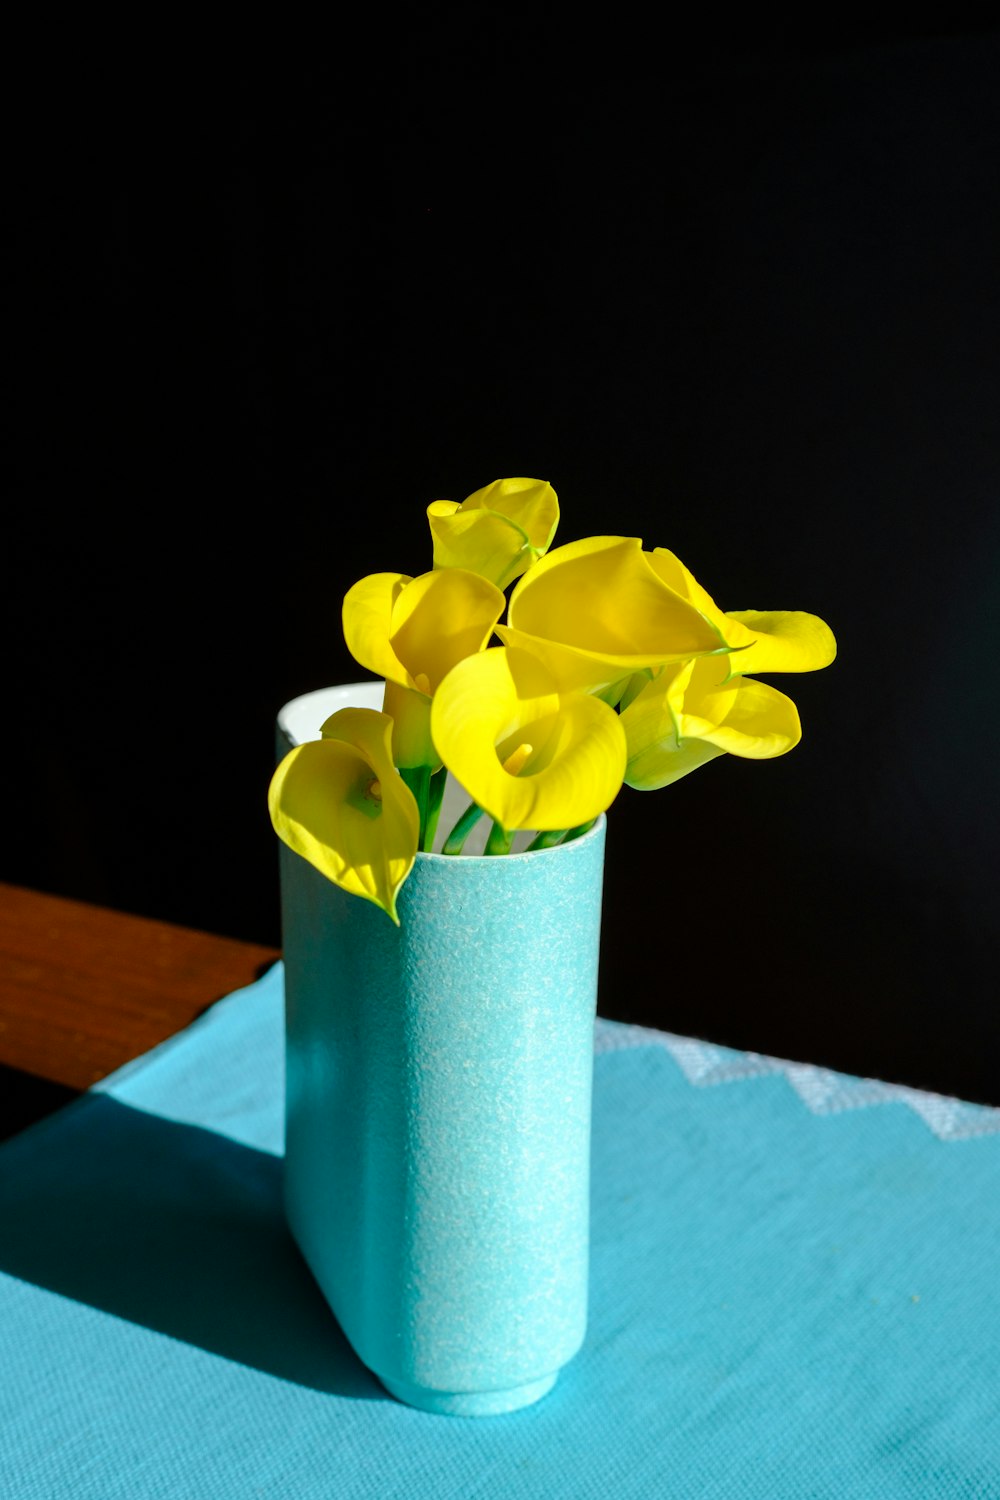 yellow flower in green vase